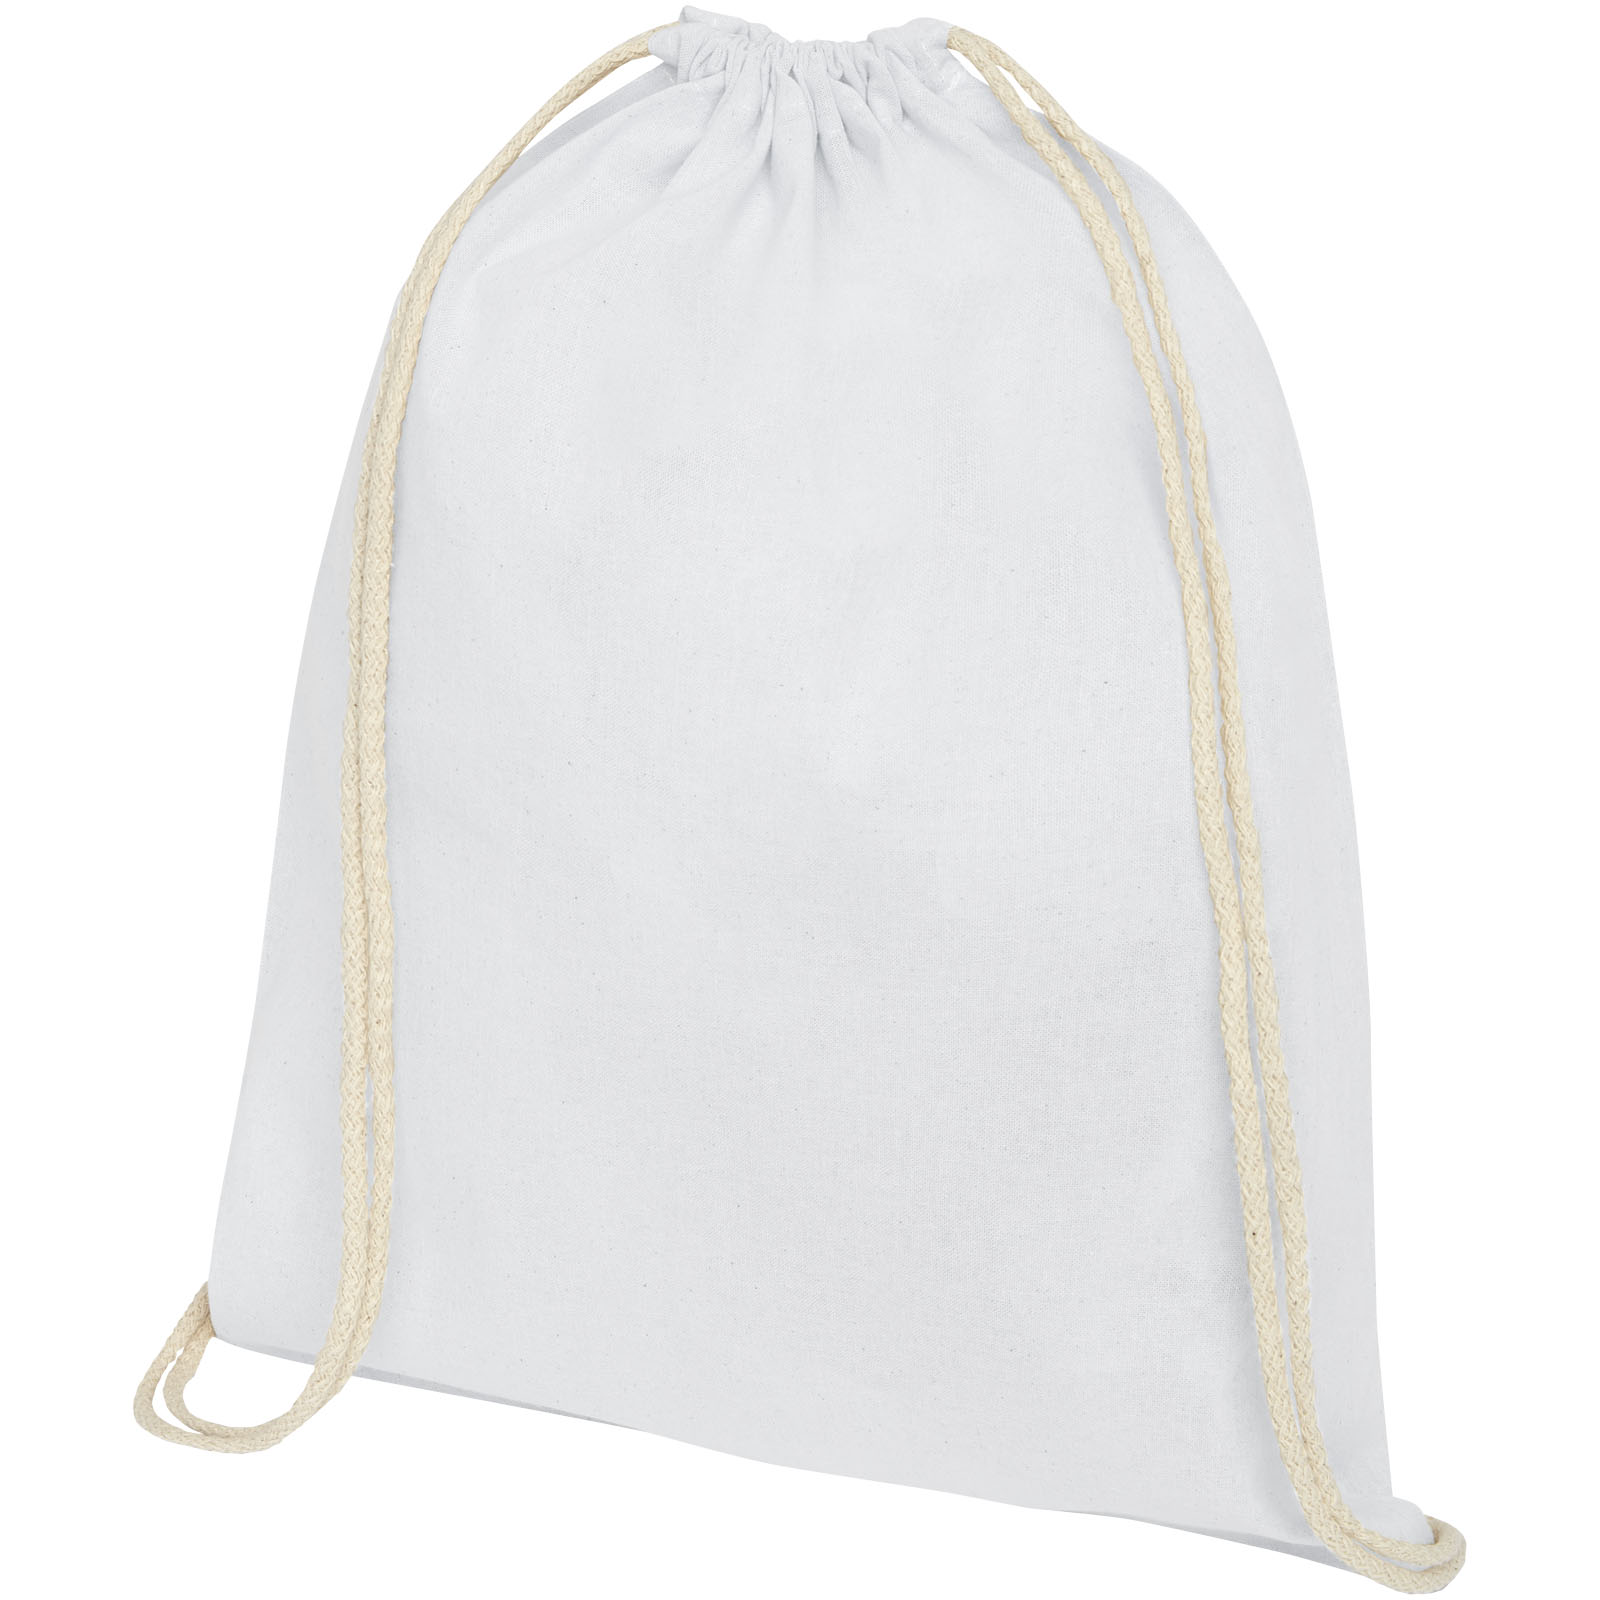 Drawstring Bags - Oregon 140 g/m² cotton drawstring bag 5L